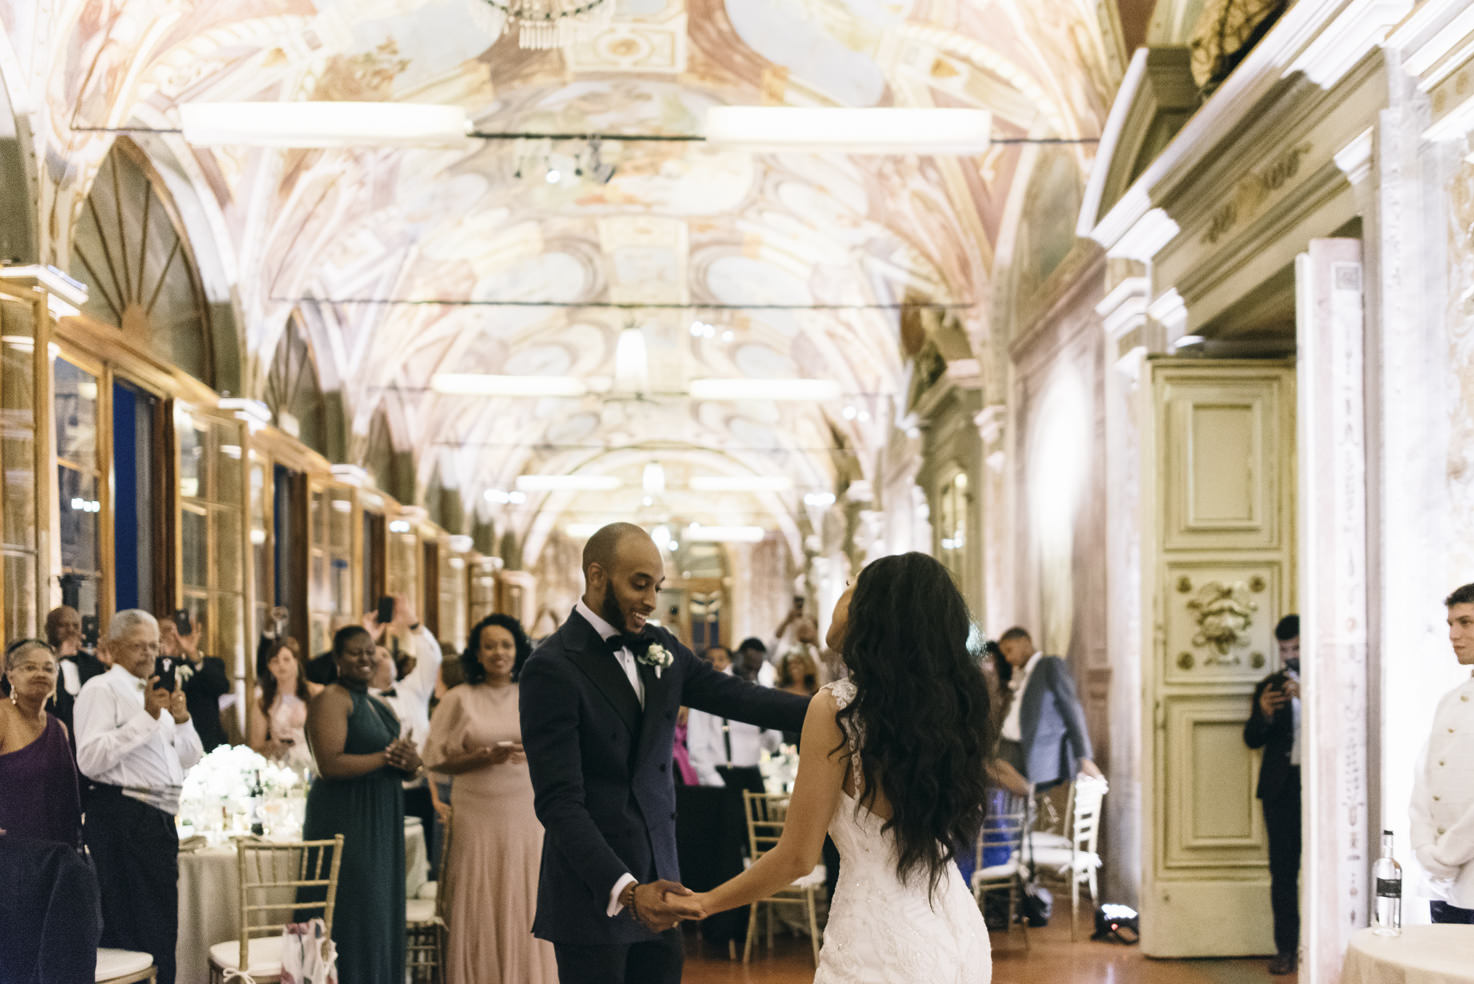 Wedding reception at Villa Corsini